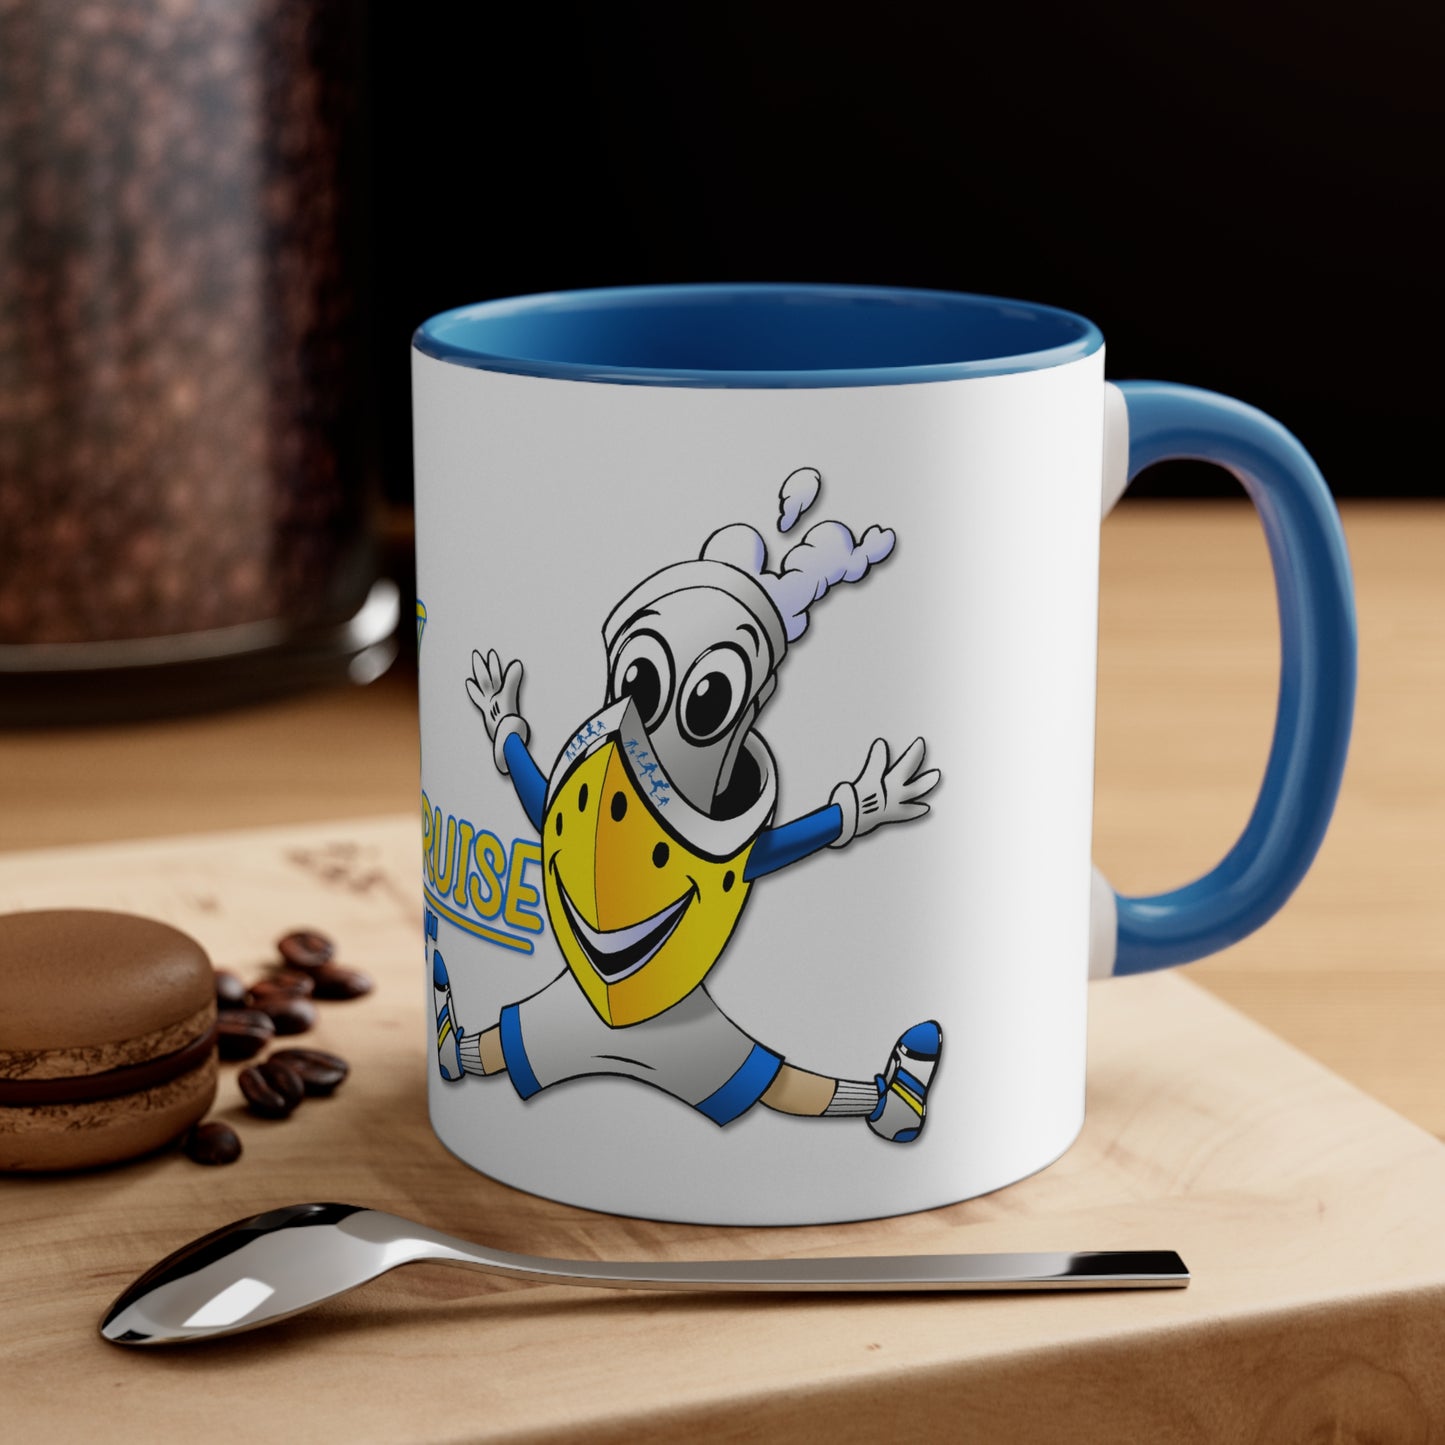 Official BUDDY CRUISE 2023 Coffee Mug, 11oz